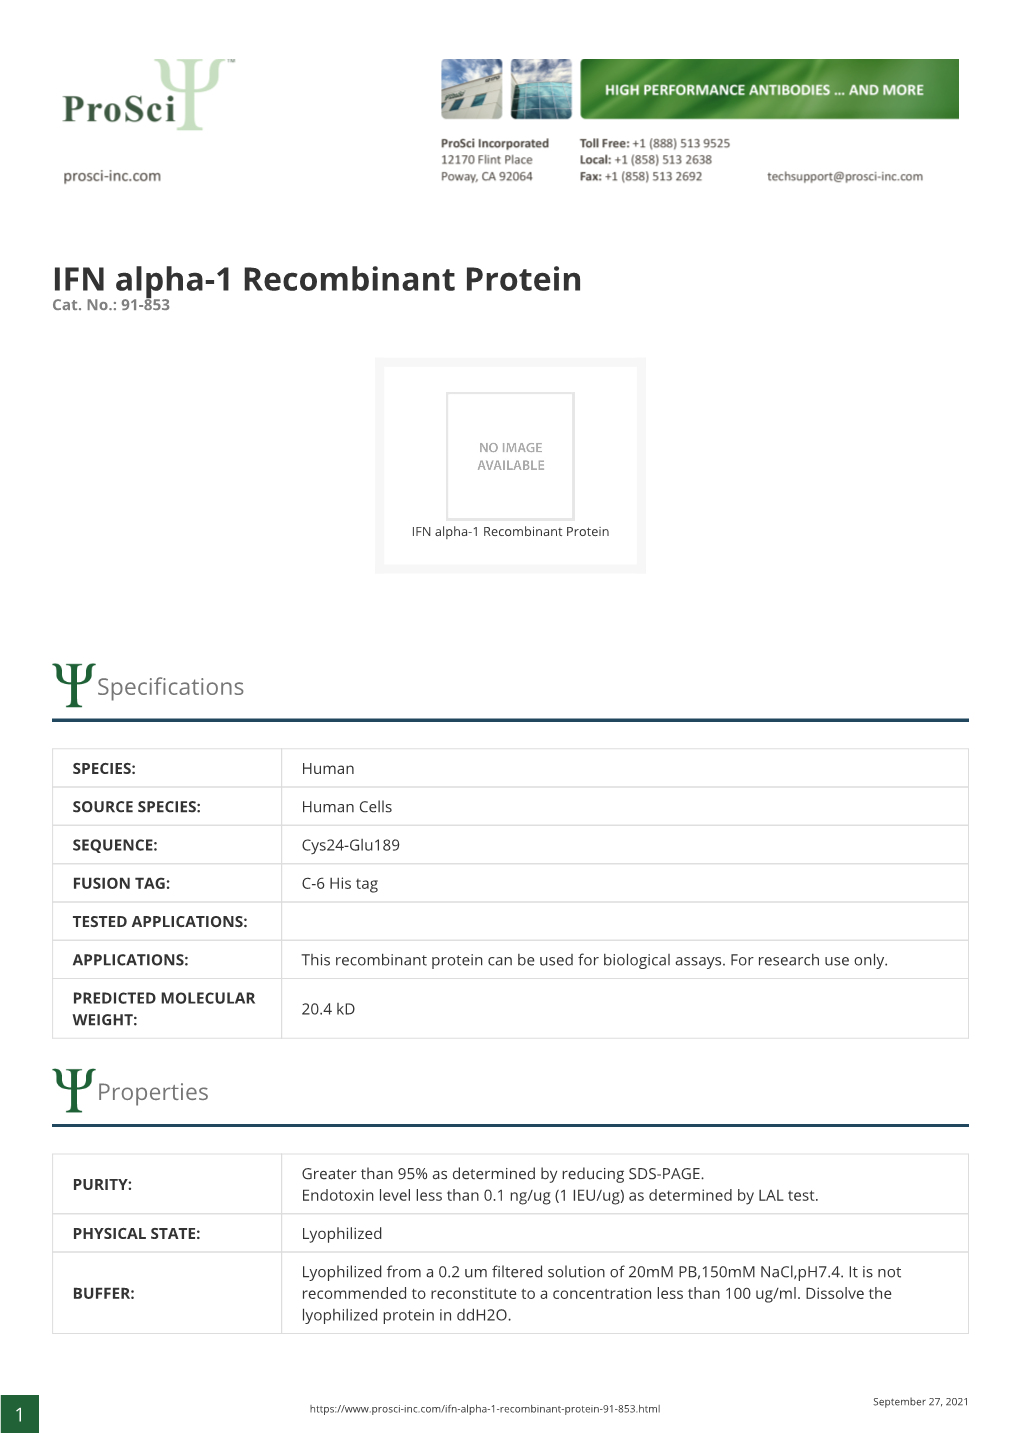 IFN Alpha-1 Recombinant Protein Cat